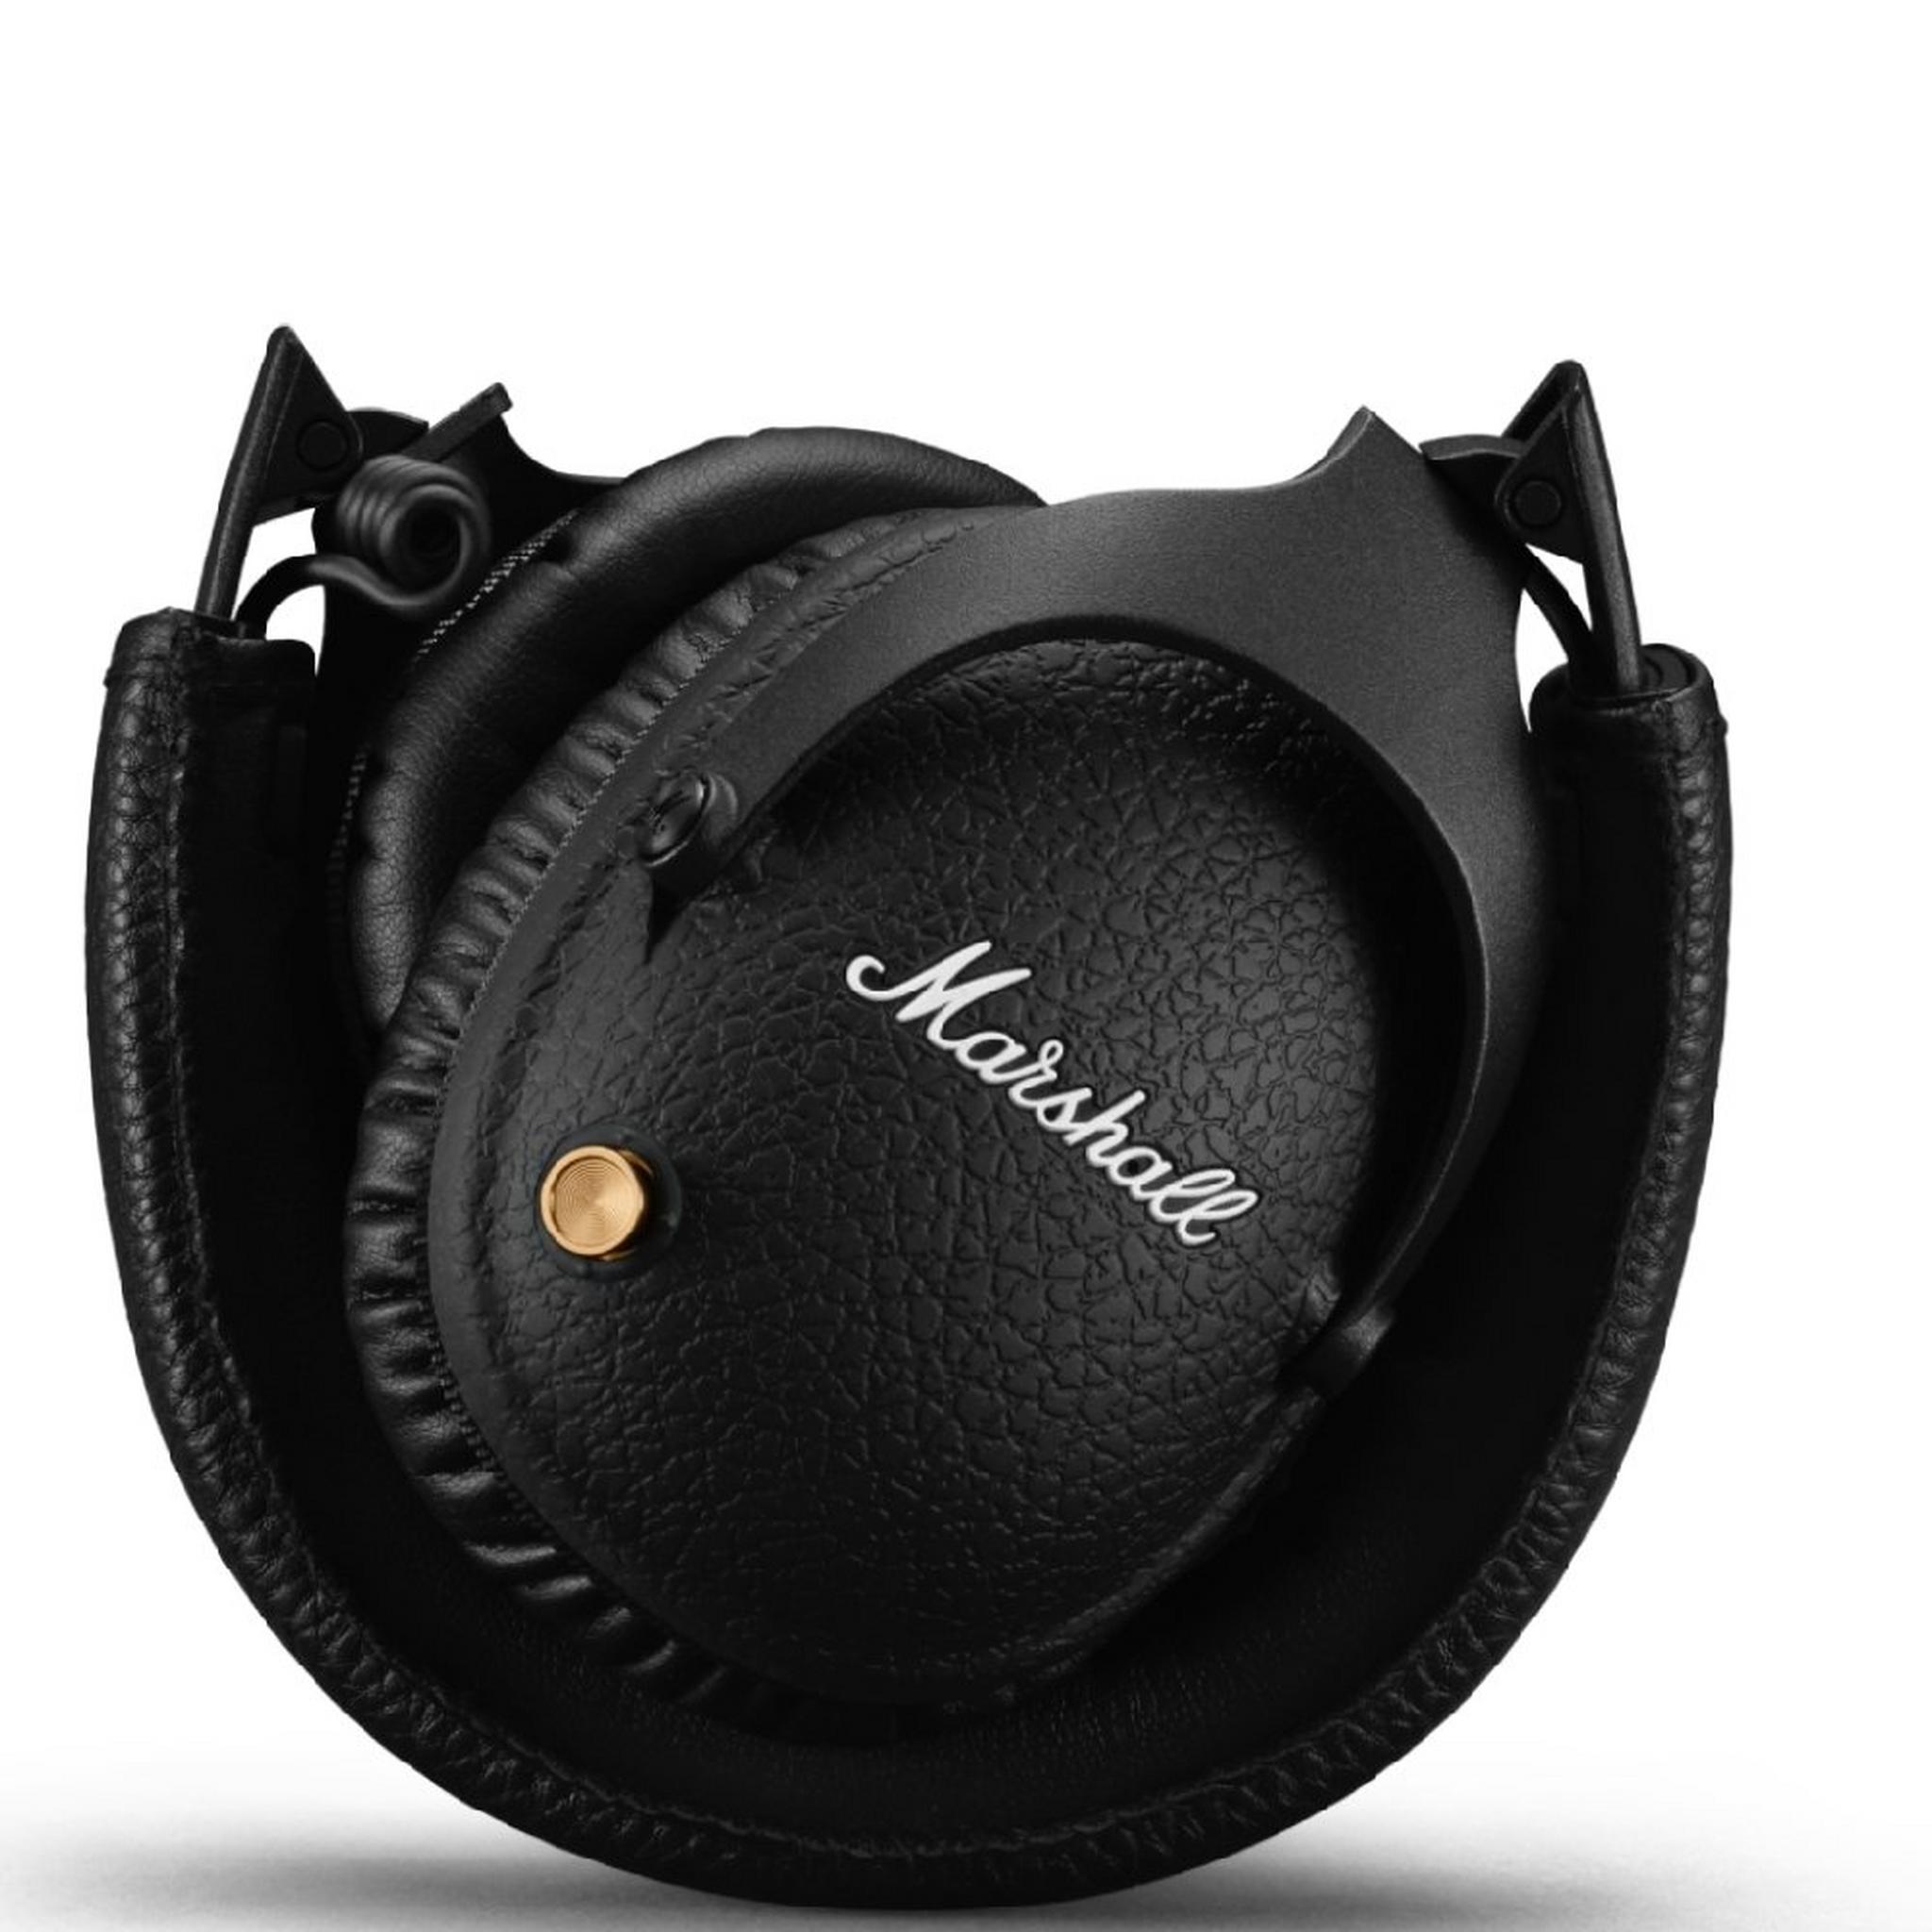 Marshall Monitor II Noise Cancelling Headphones - Black